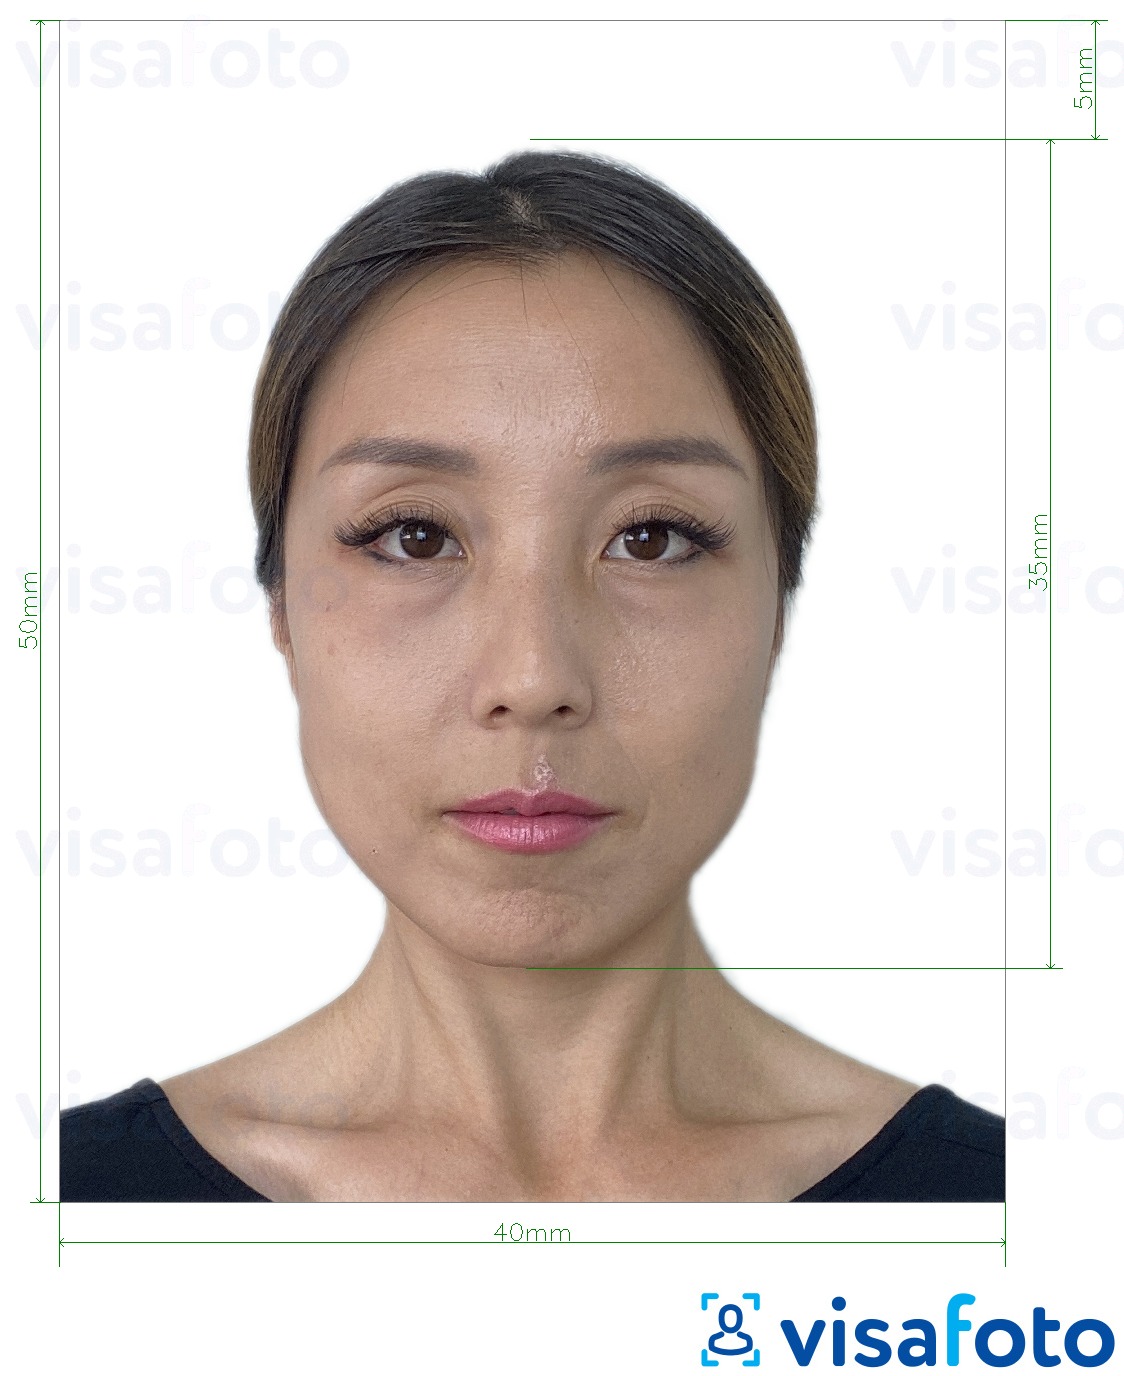 Primjer fotografije za Hong Kong Visa 40x50 mm (4x5 cm) s točno određenom veličinom